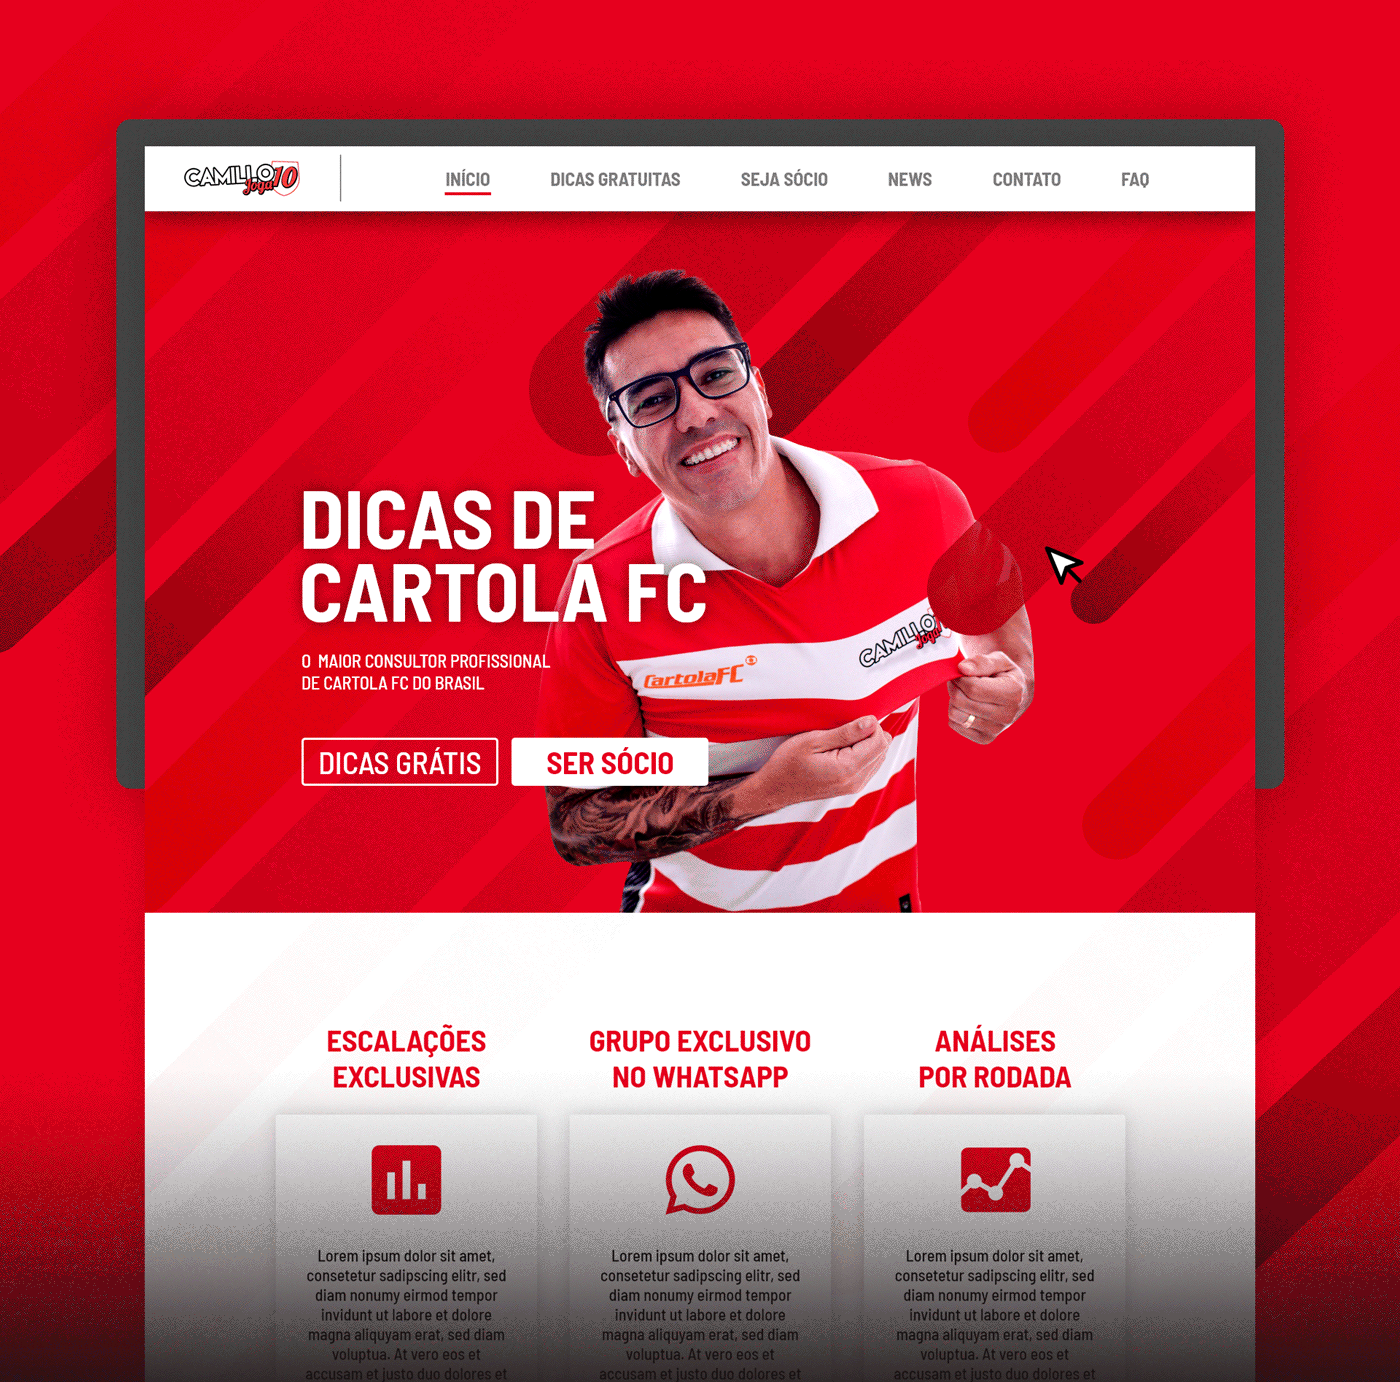 Web design ux UI site cartola fc camillo joga10 Website